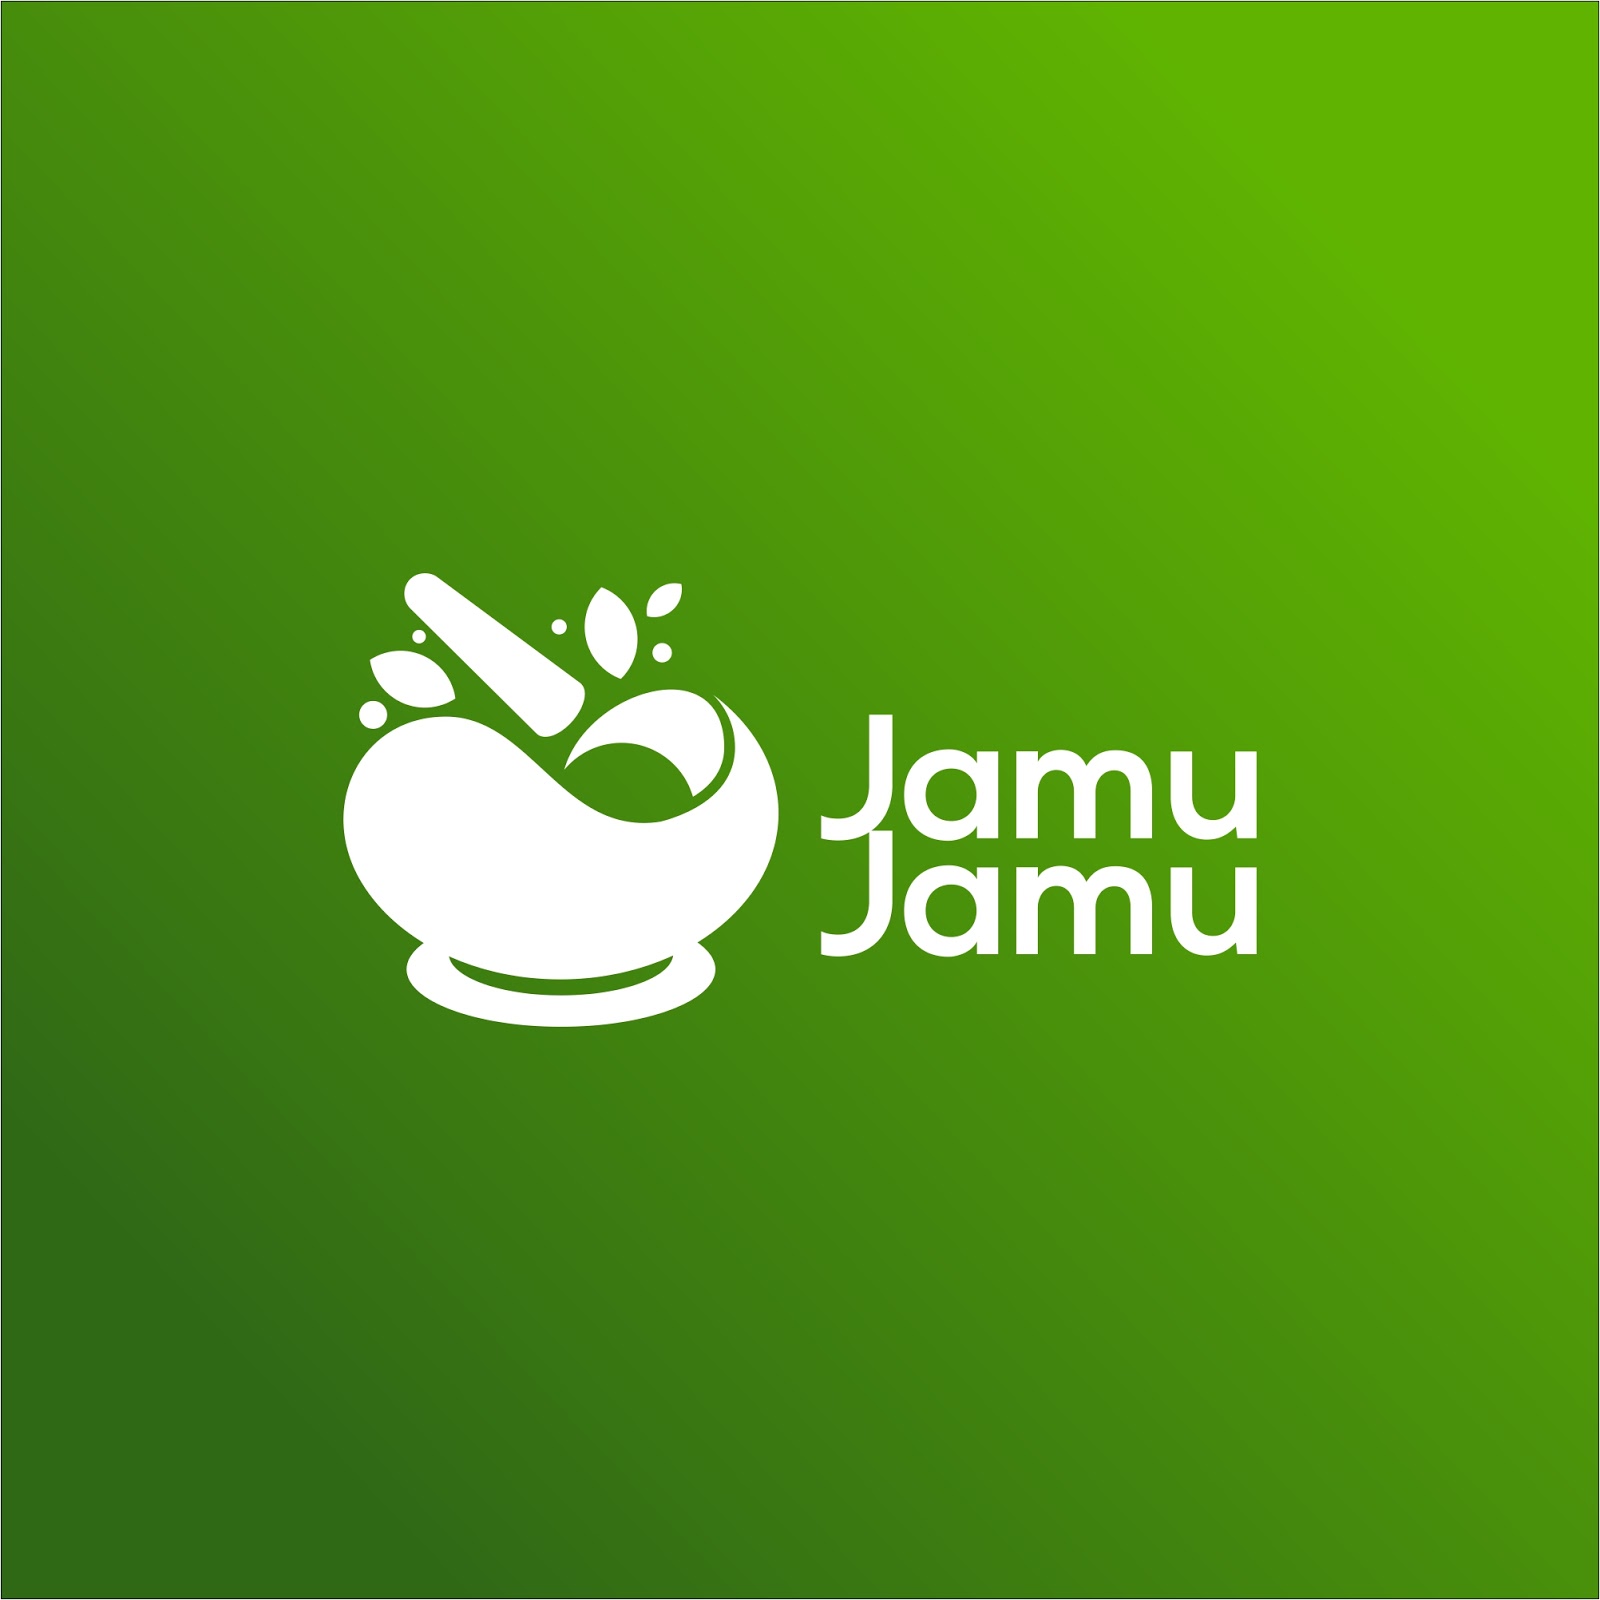  Desain  Logo  Jamu  jamu  Jasa Desain  Logo  Dan Desain  Grafis 